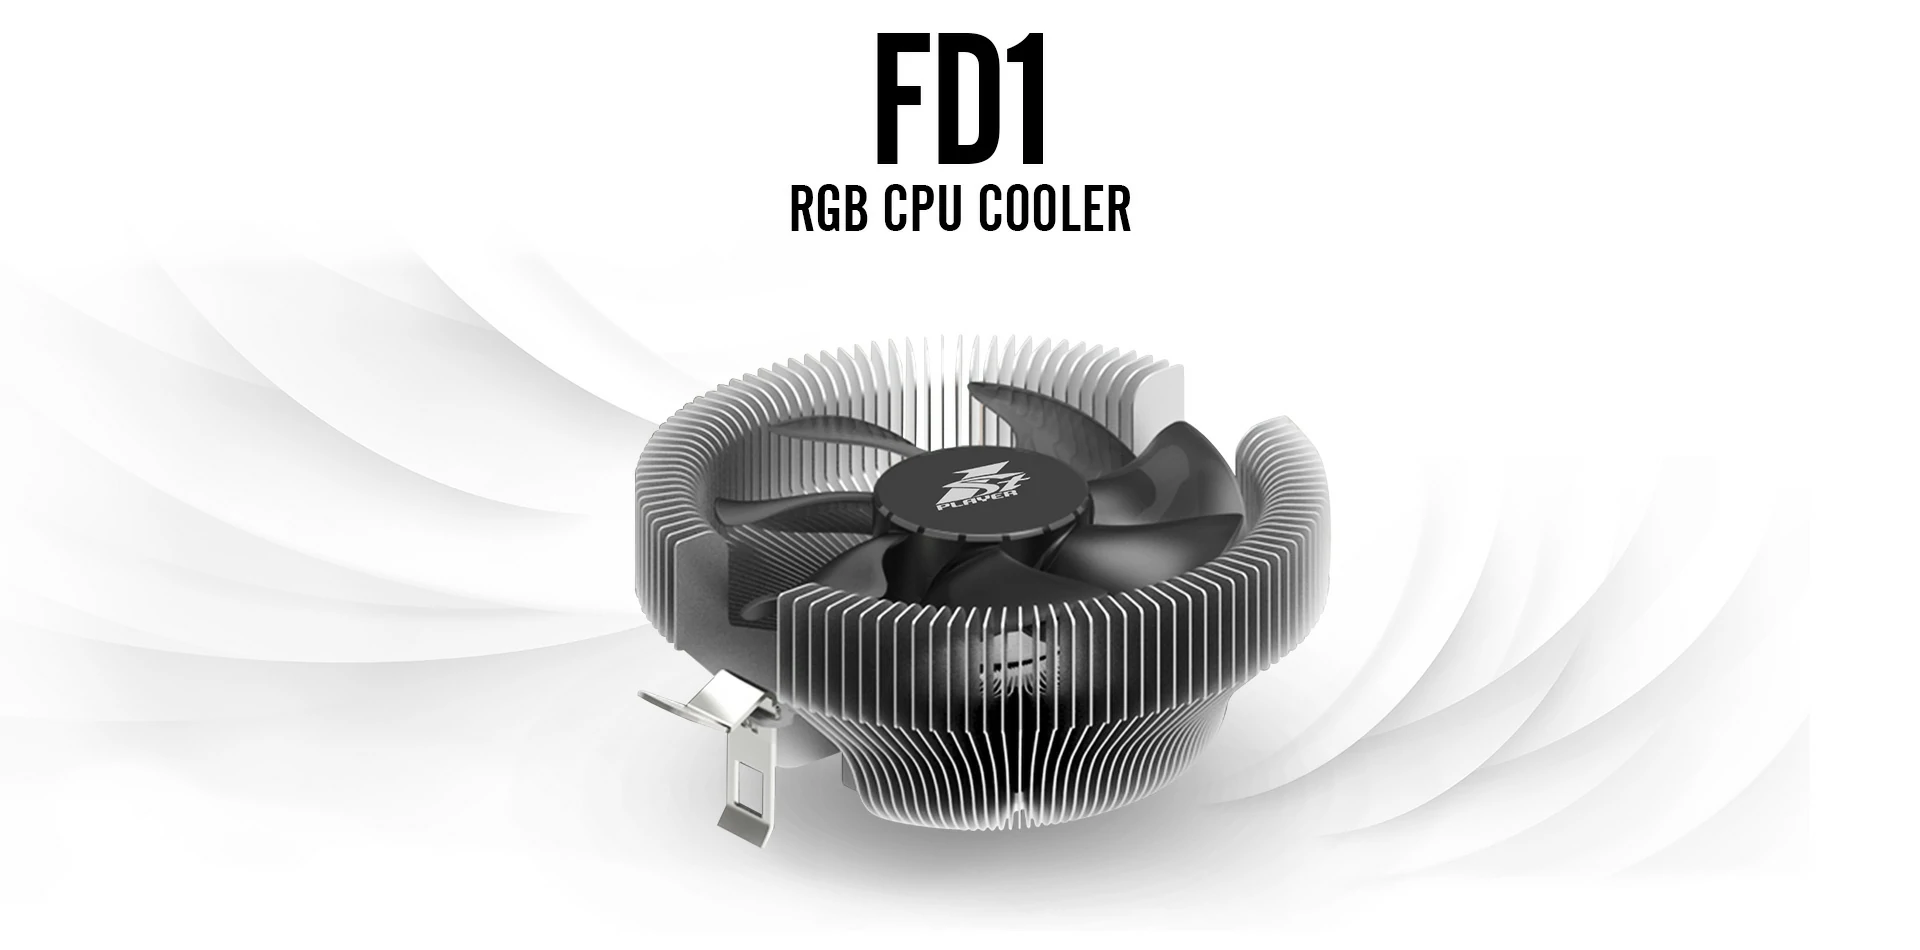 Overview - 1st Player - FD1 CPU Cooler